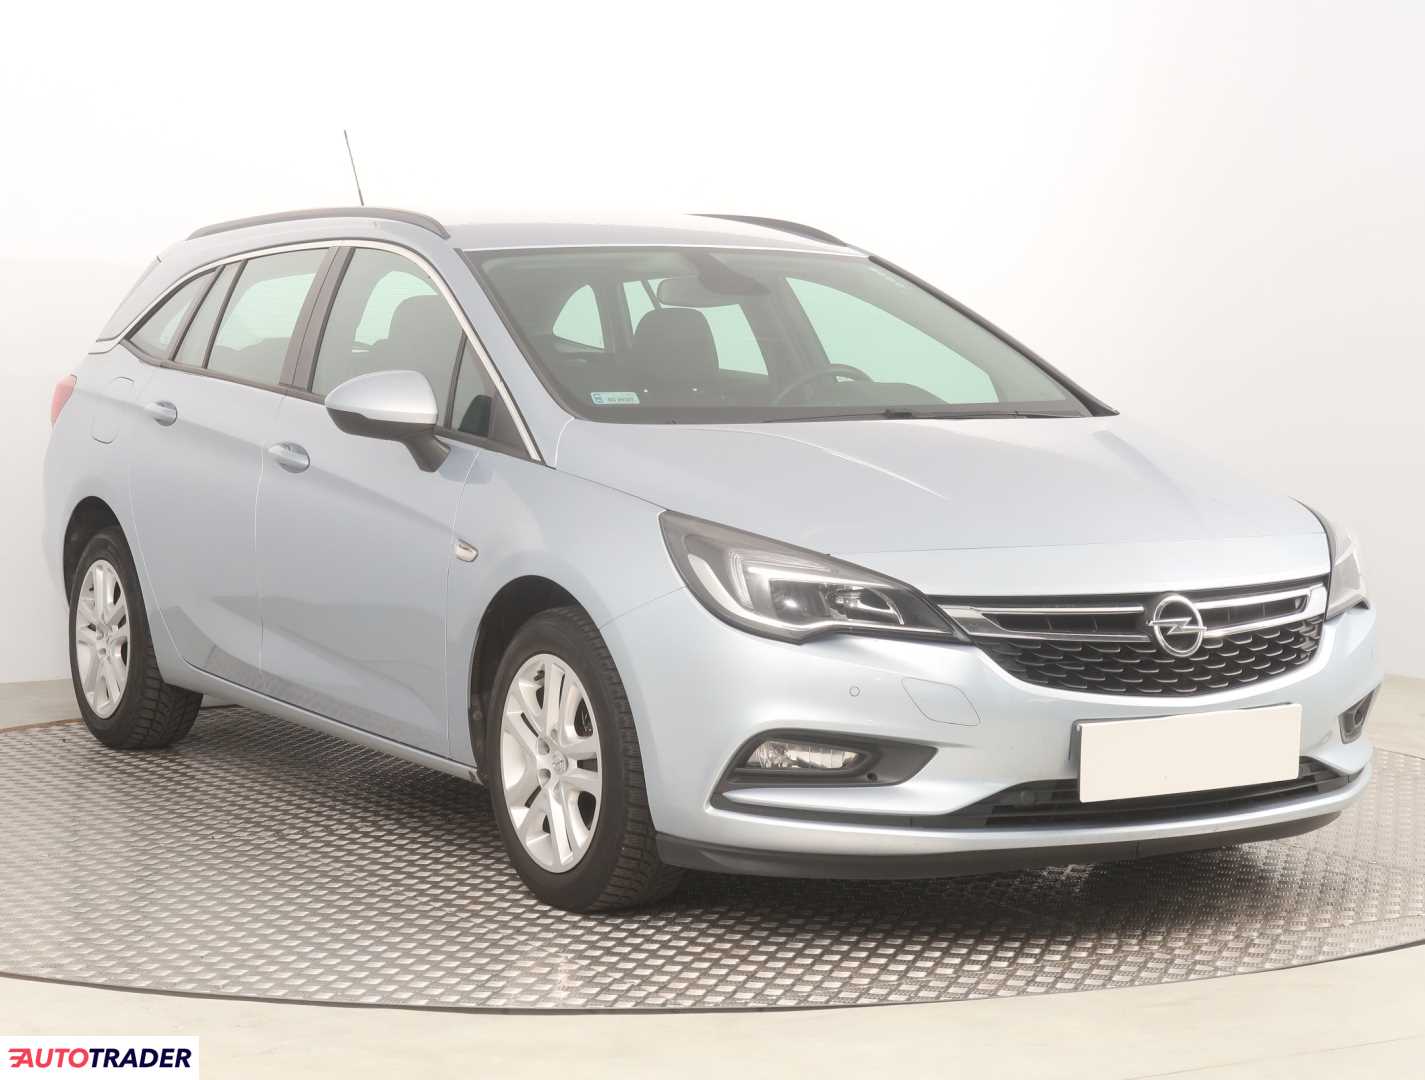 Opel Astra 2018 1.4 147 KM